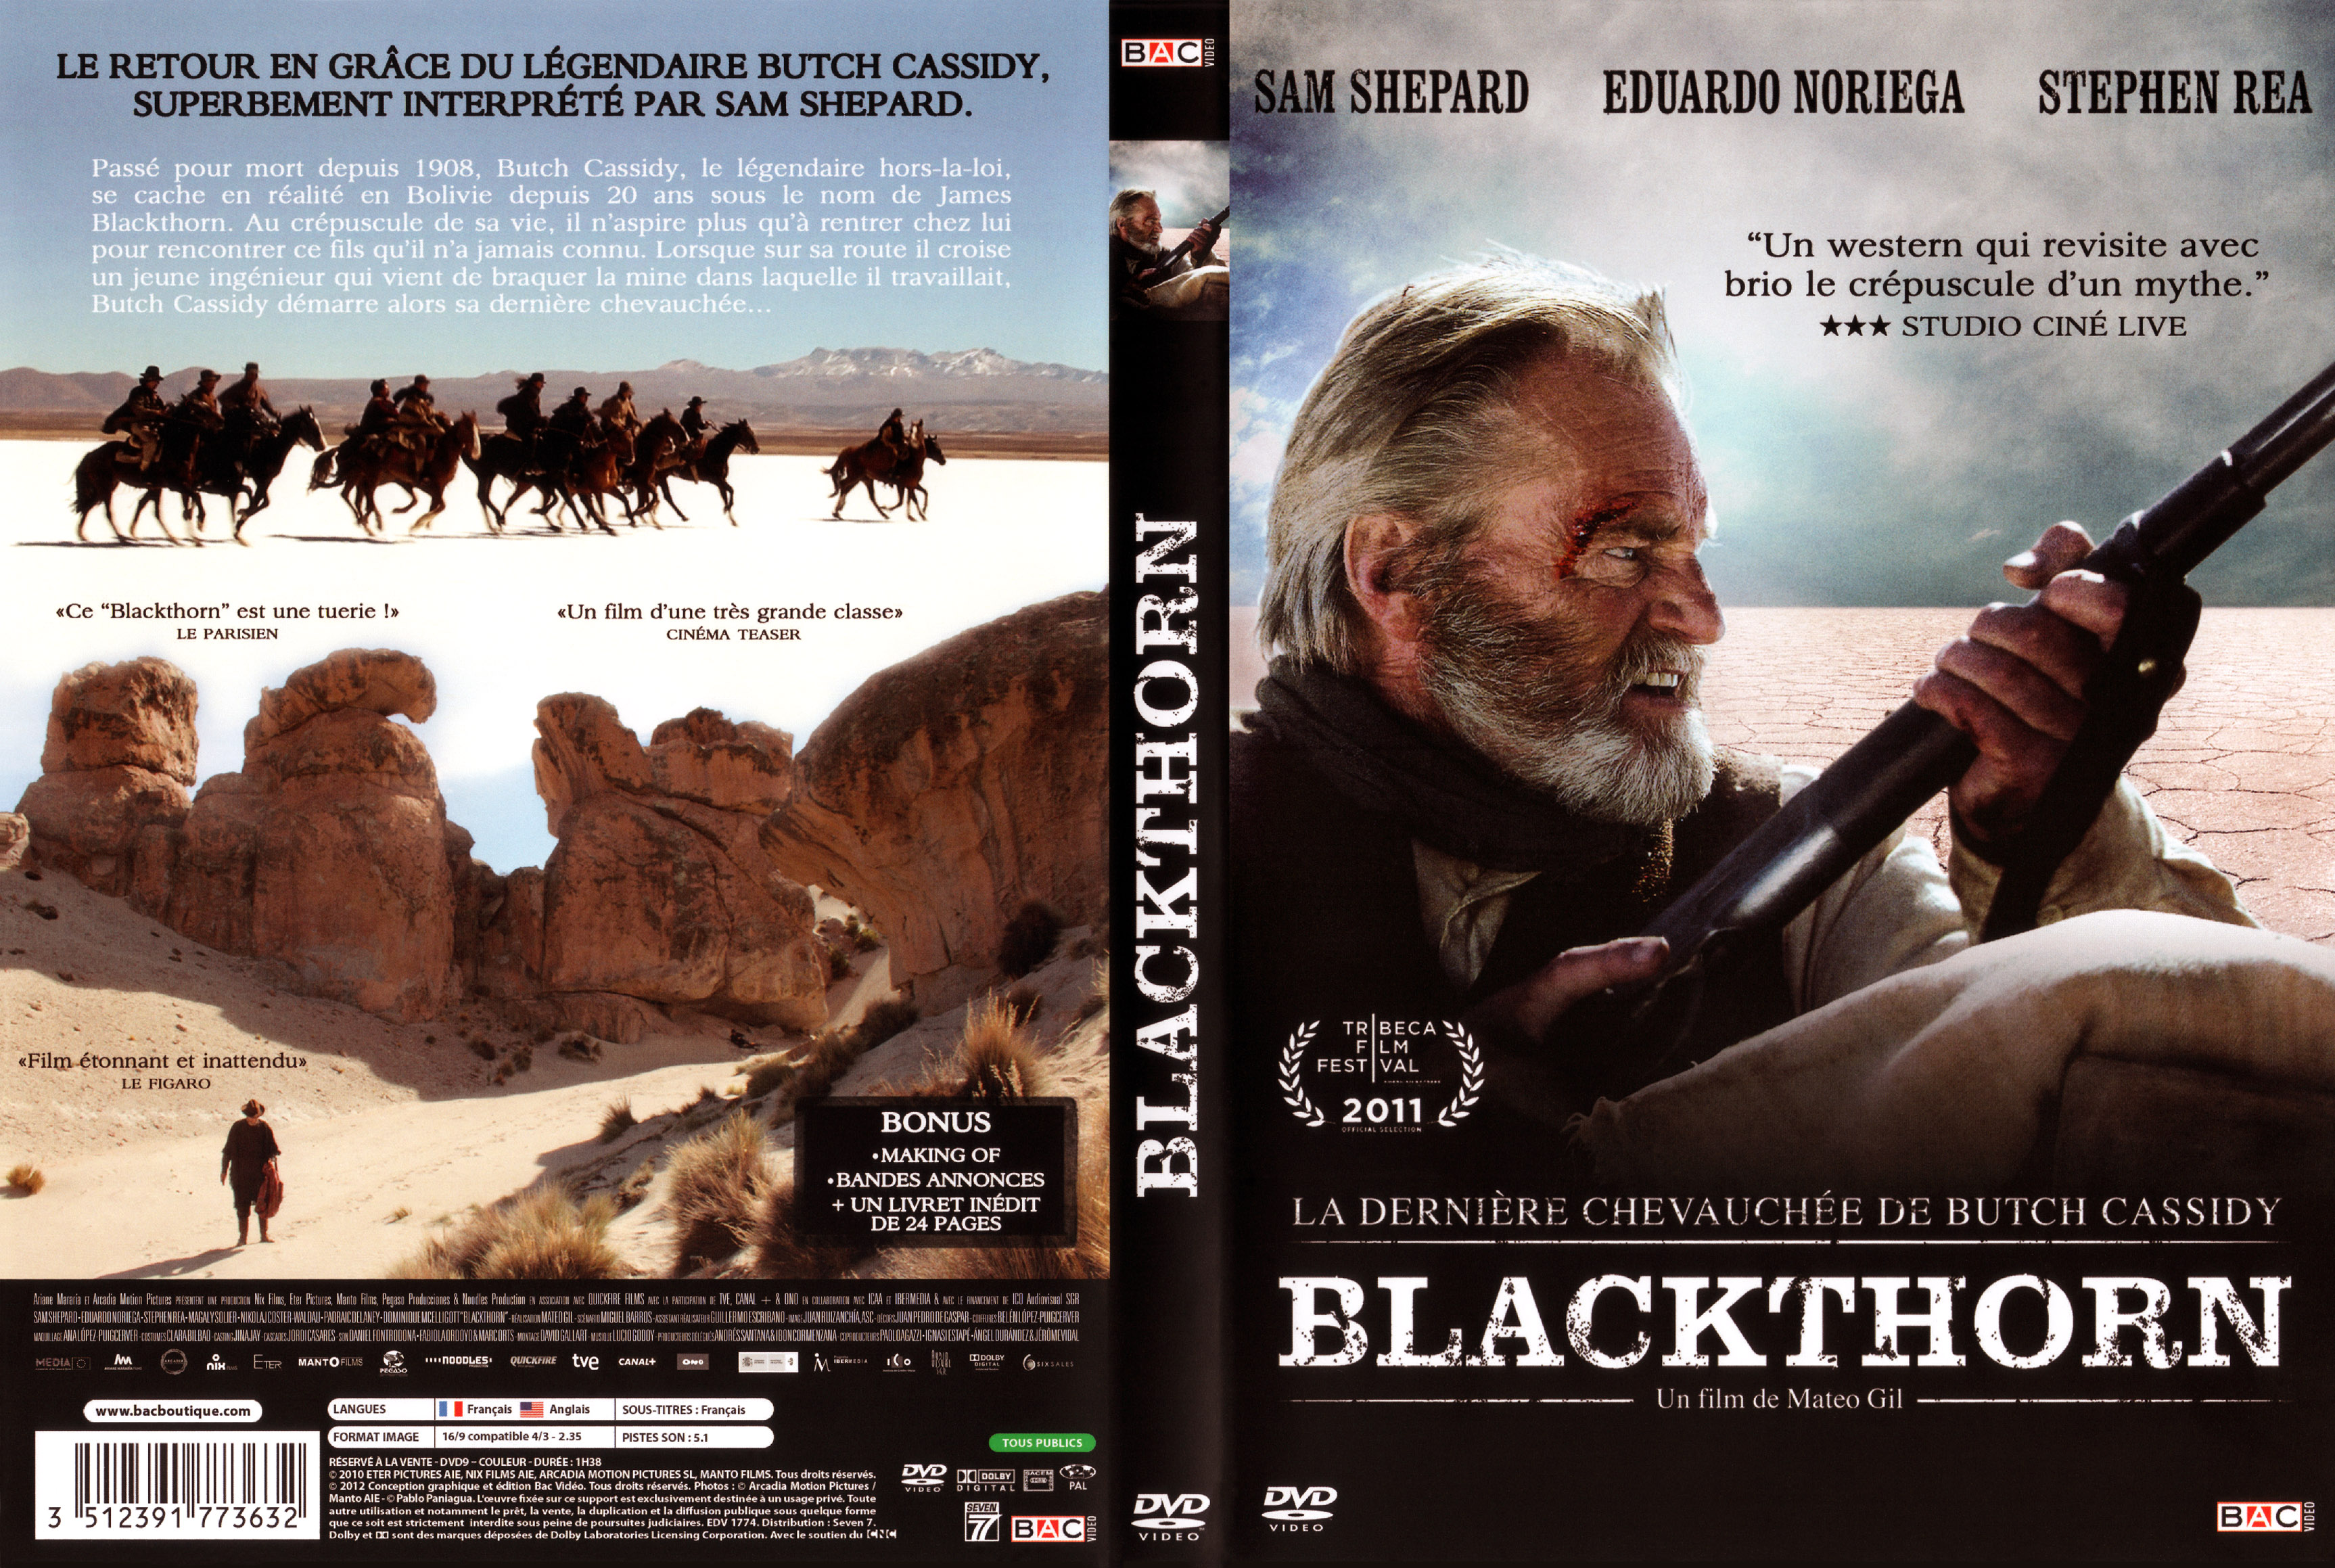 Jaquette DVD Blackthorn